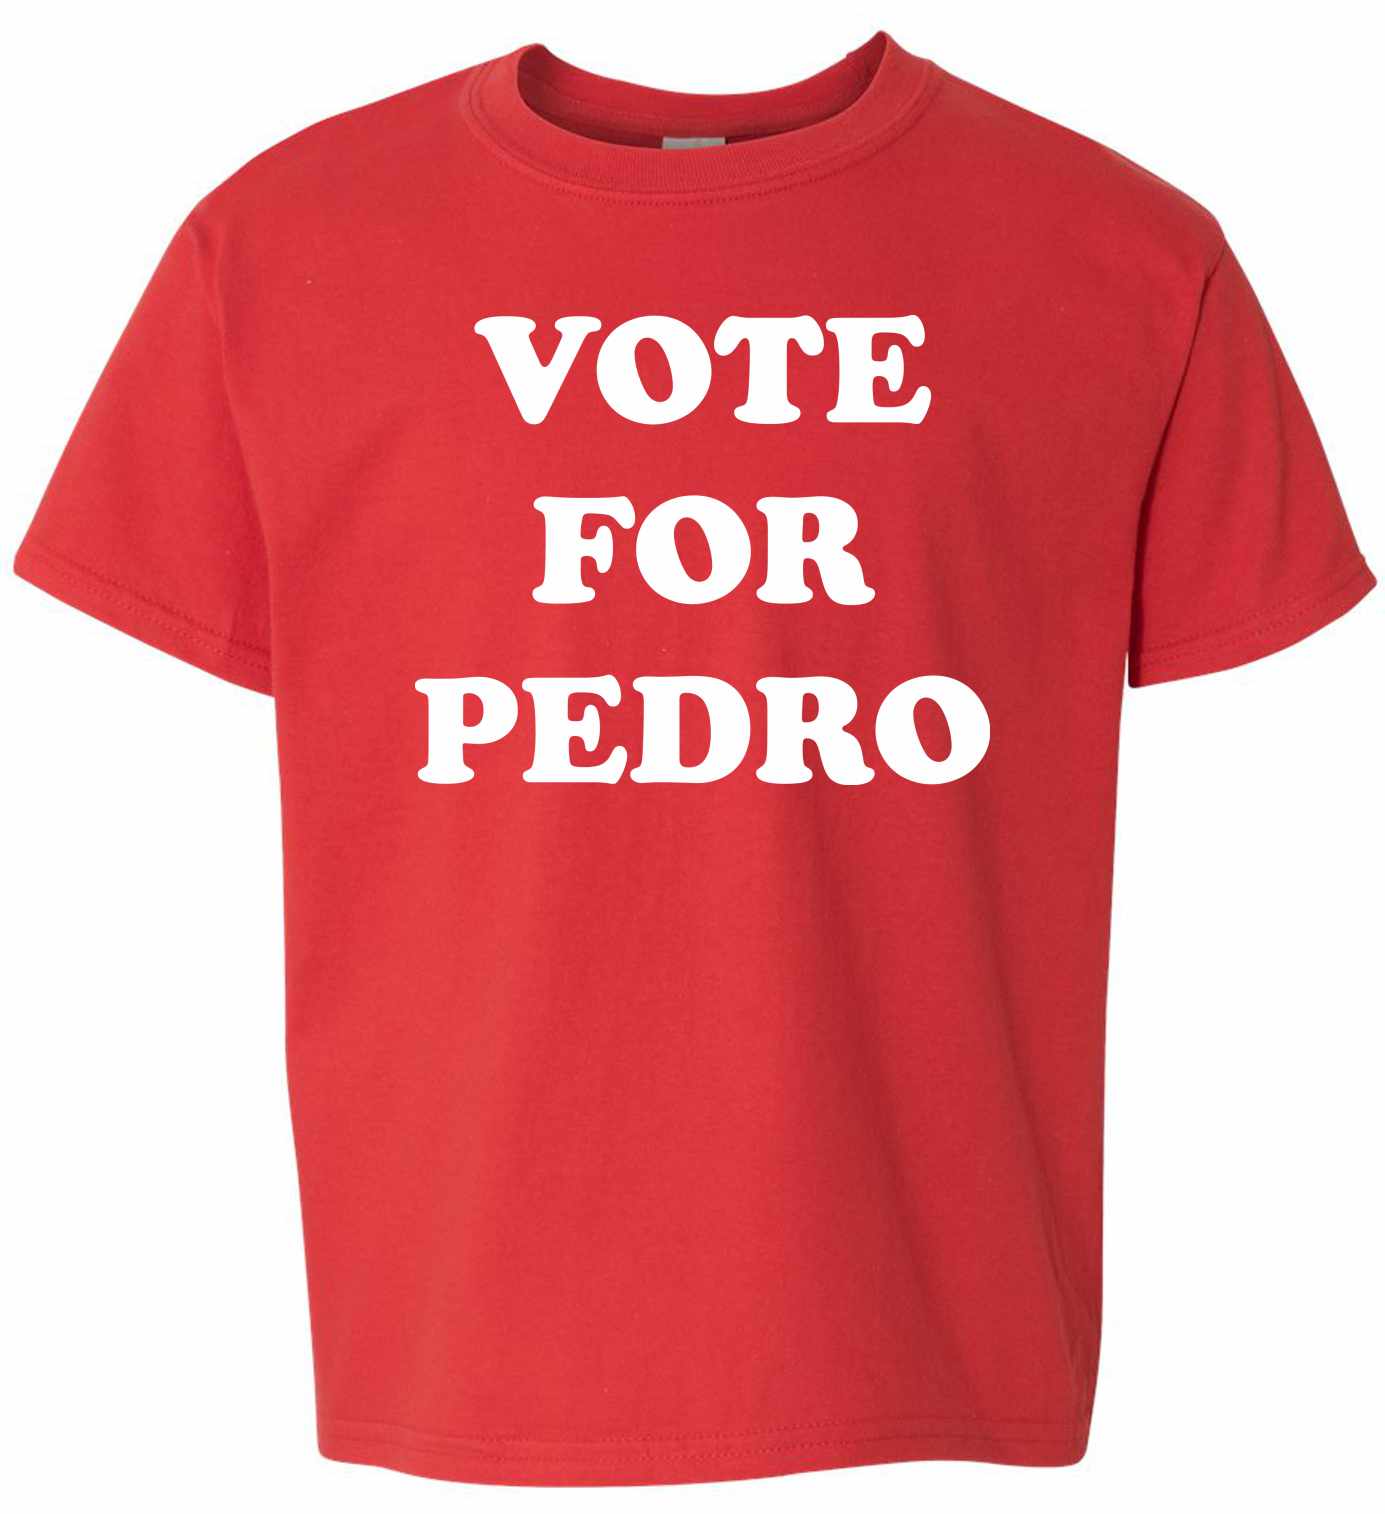 Vote For Pedro on Kids T-Shirt